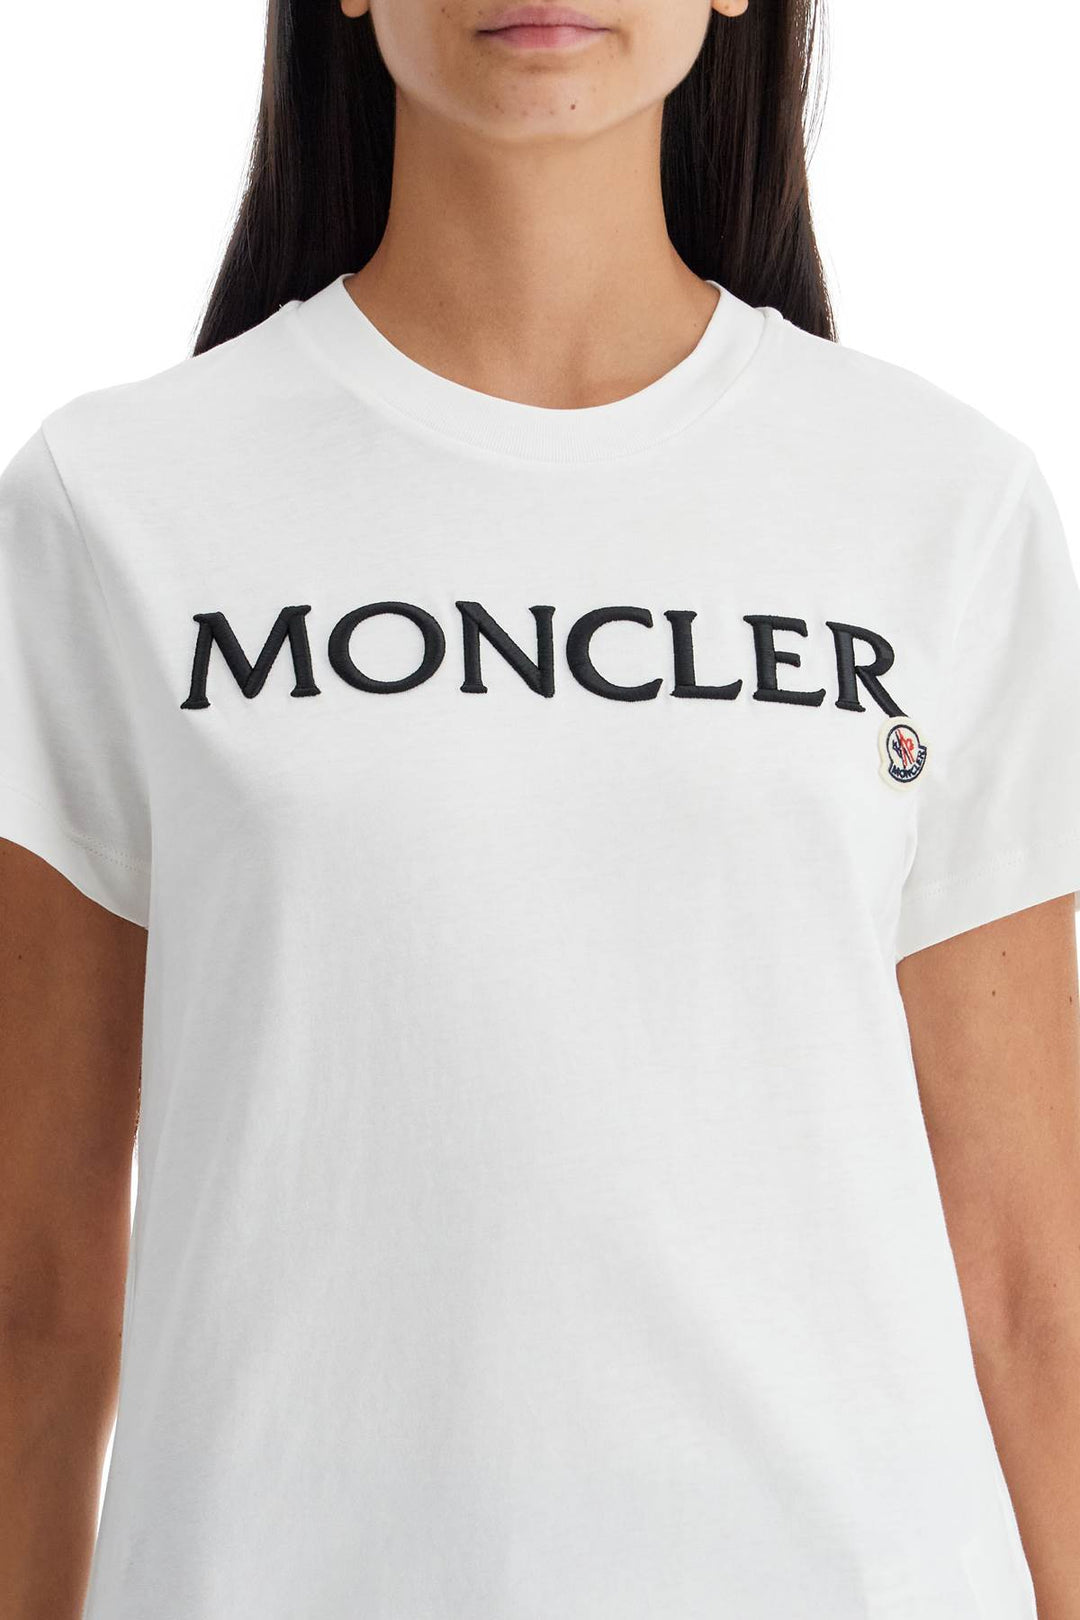 Moncler Embroidered Logo T Shirt   White